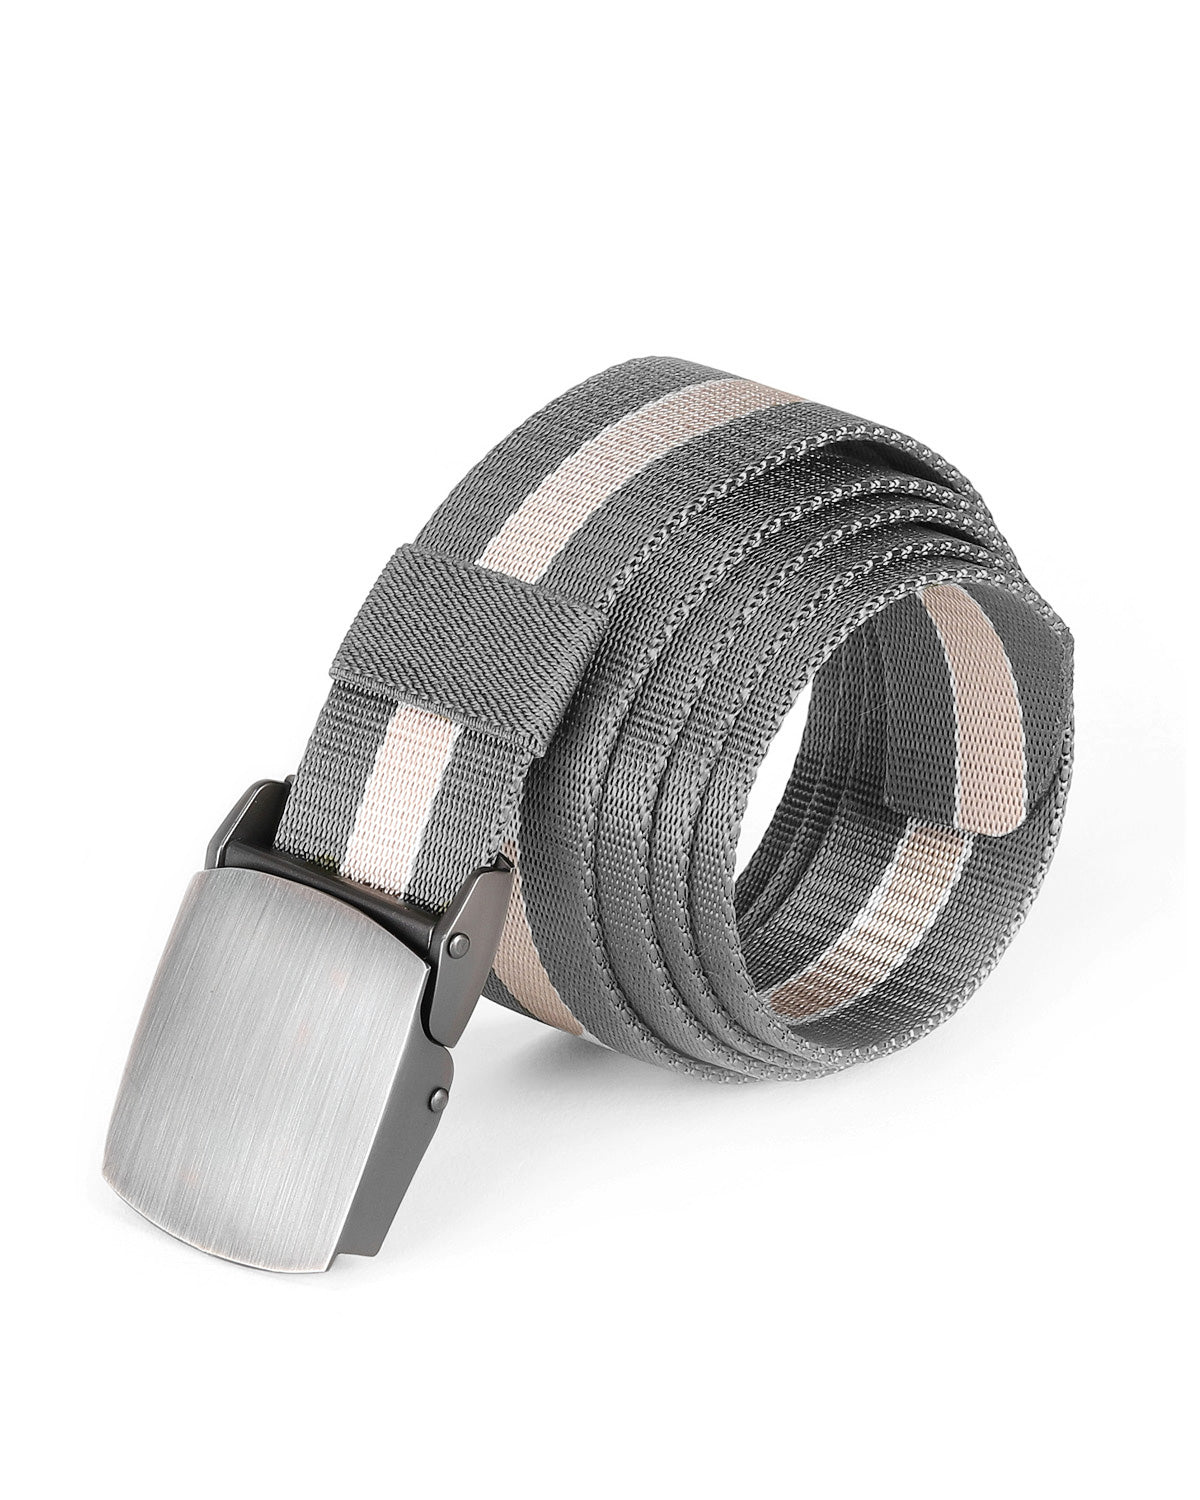 Men's One Size Adjustable Strap Stripe Nylon Web Belt With Metal Buckle